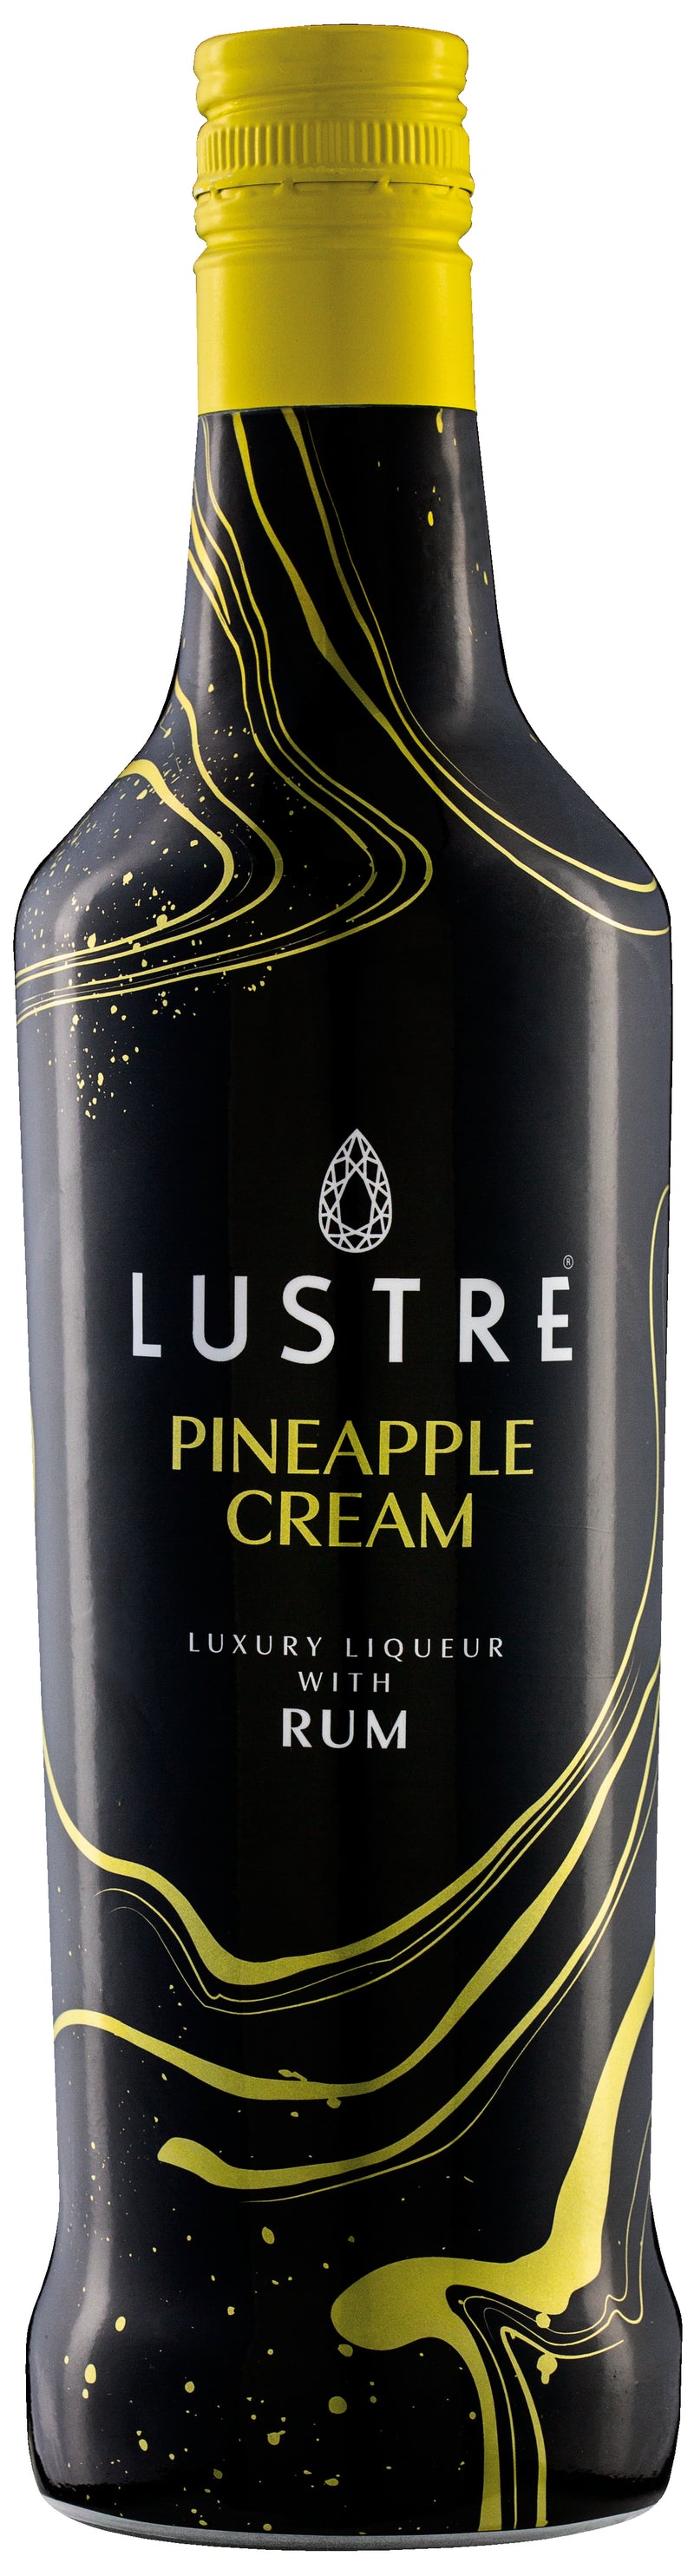 Lustre Pineapple Cream with Rum 70cl